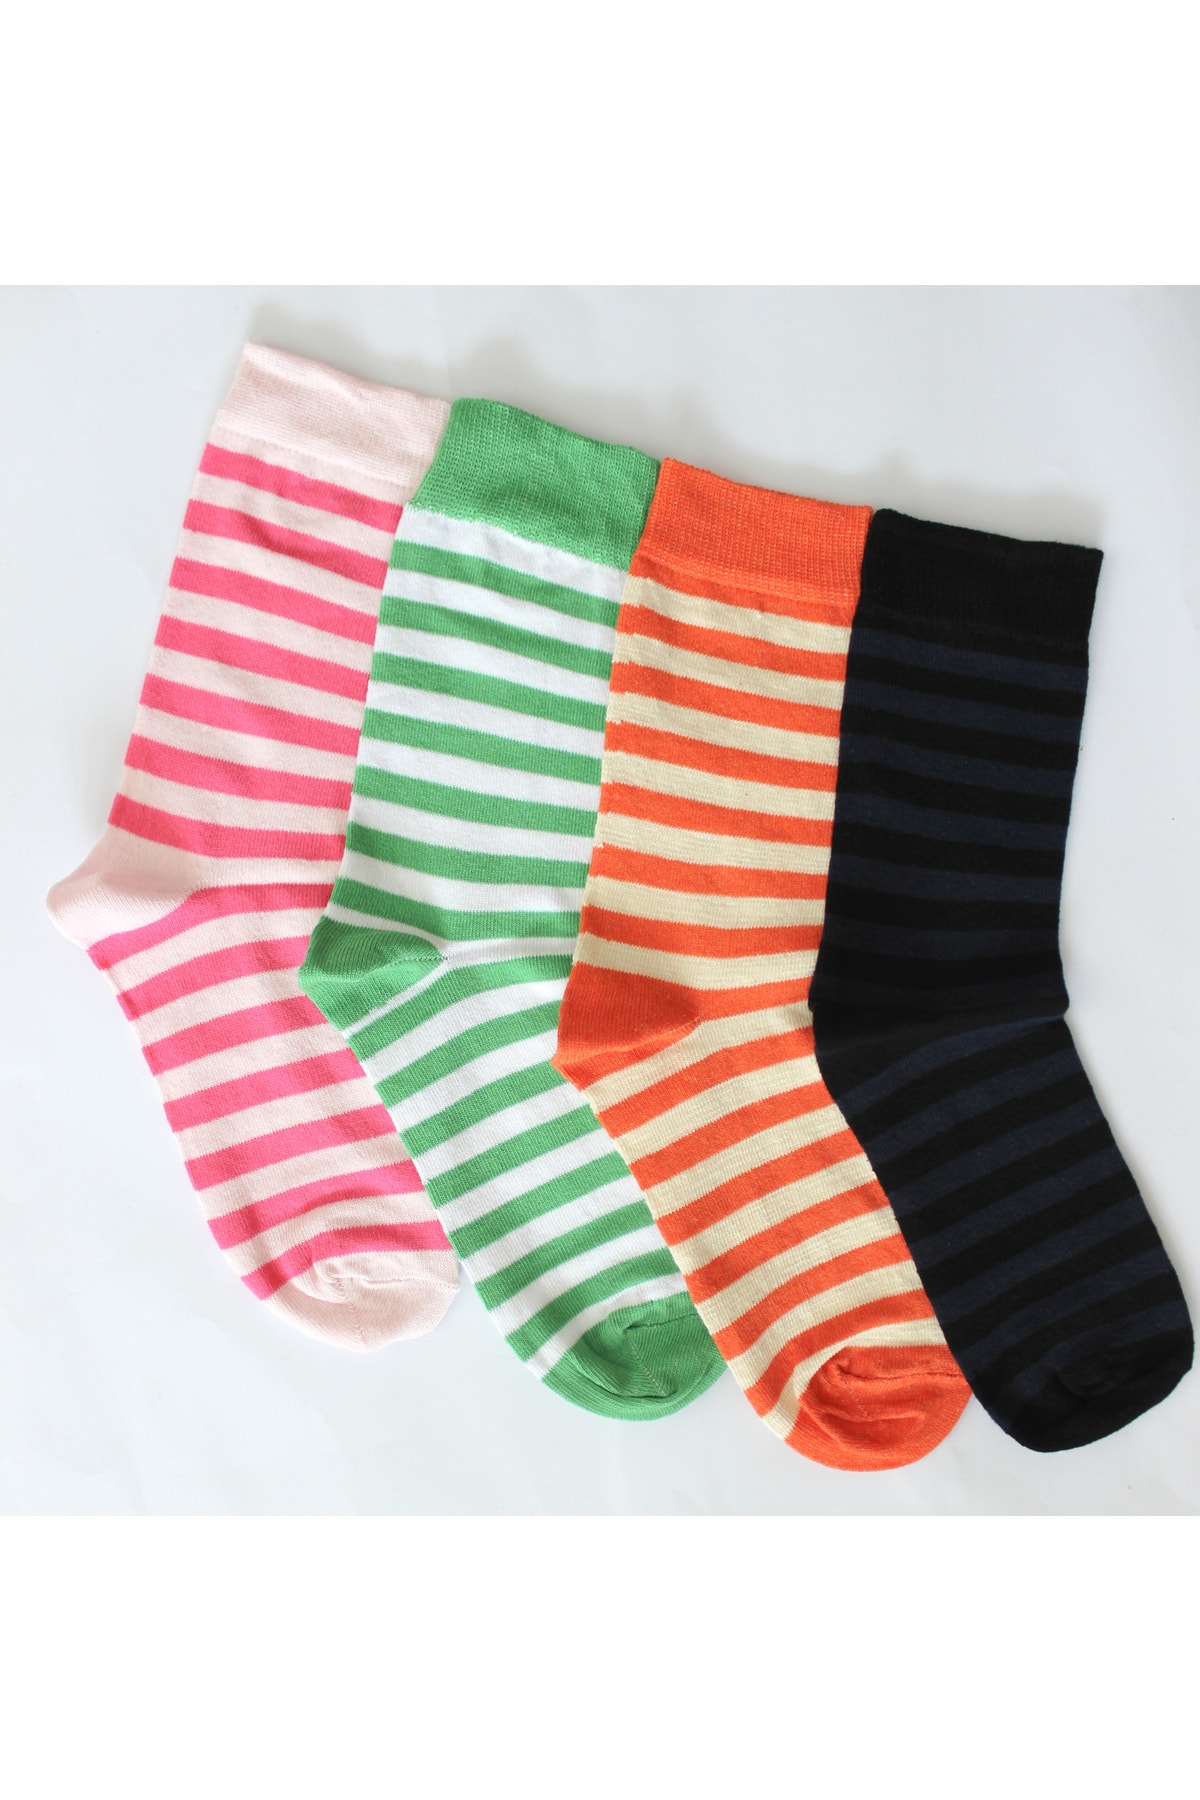 heavytextile Desenli Renkli Çorap Seti 4'lü Paket